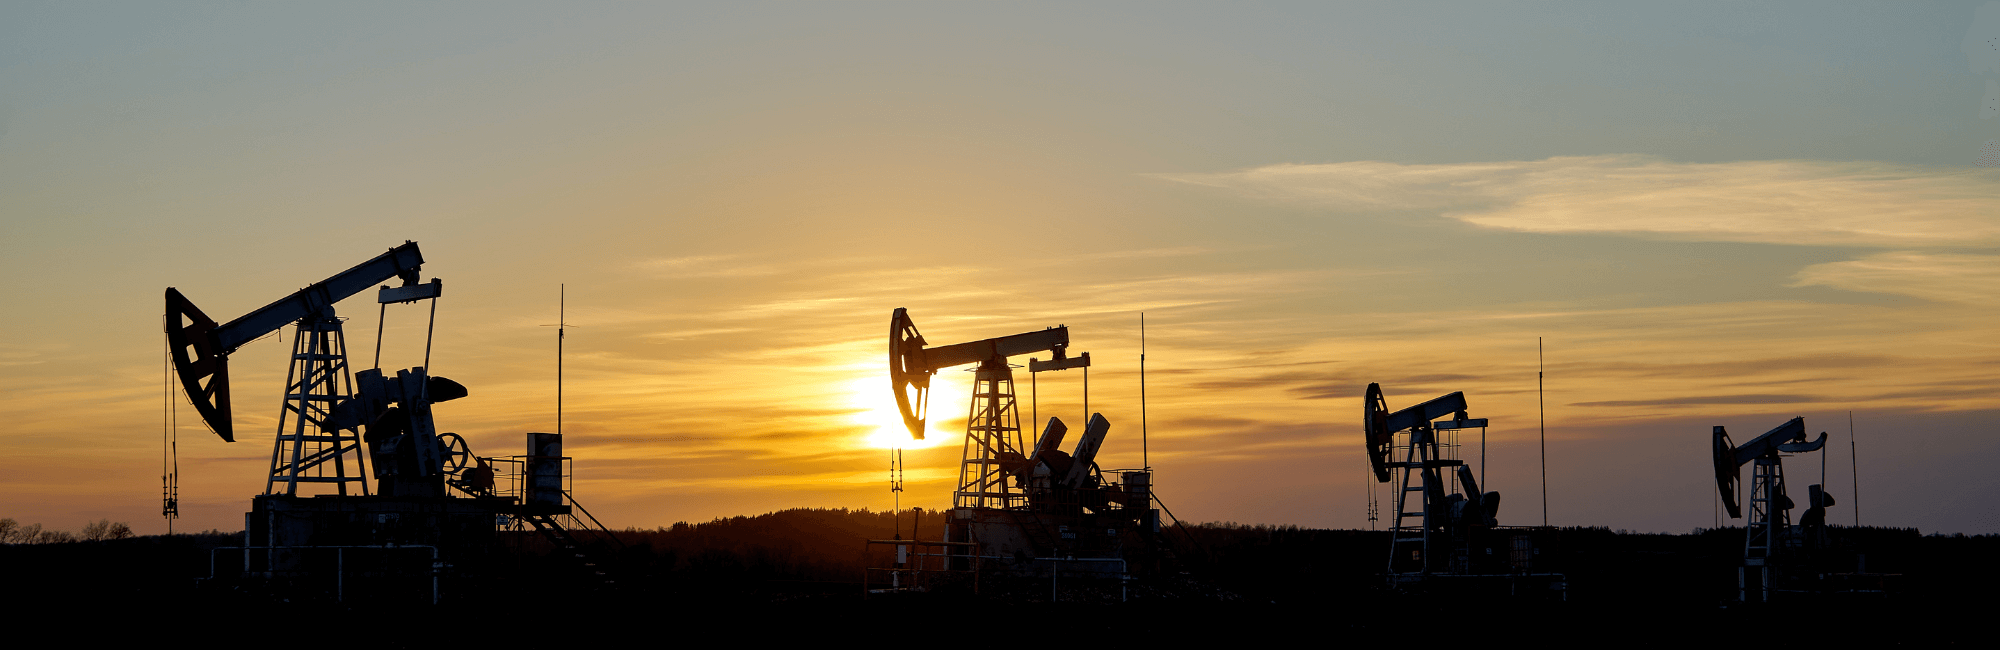 Oil field with four Derricks in sunset skyline